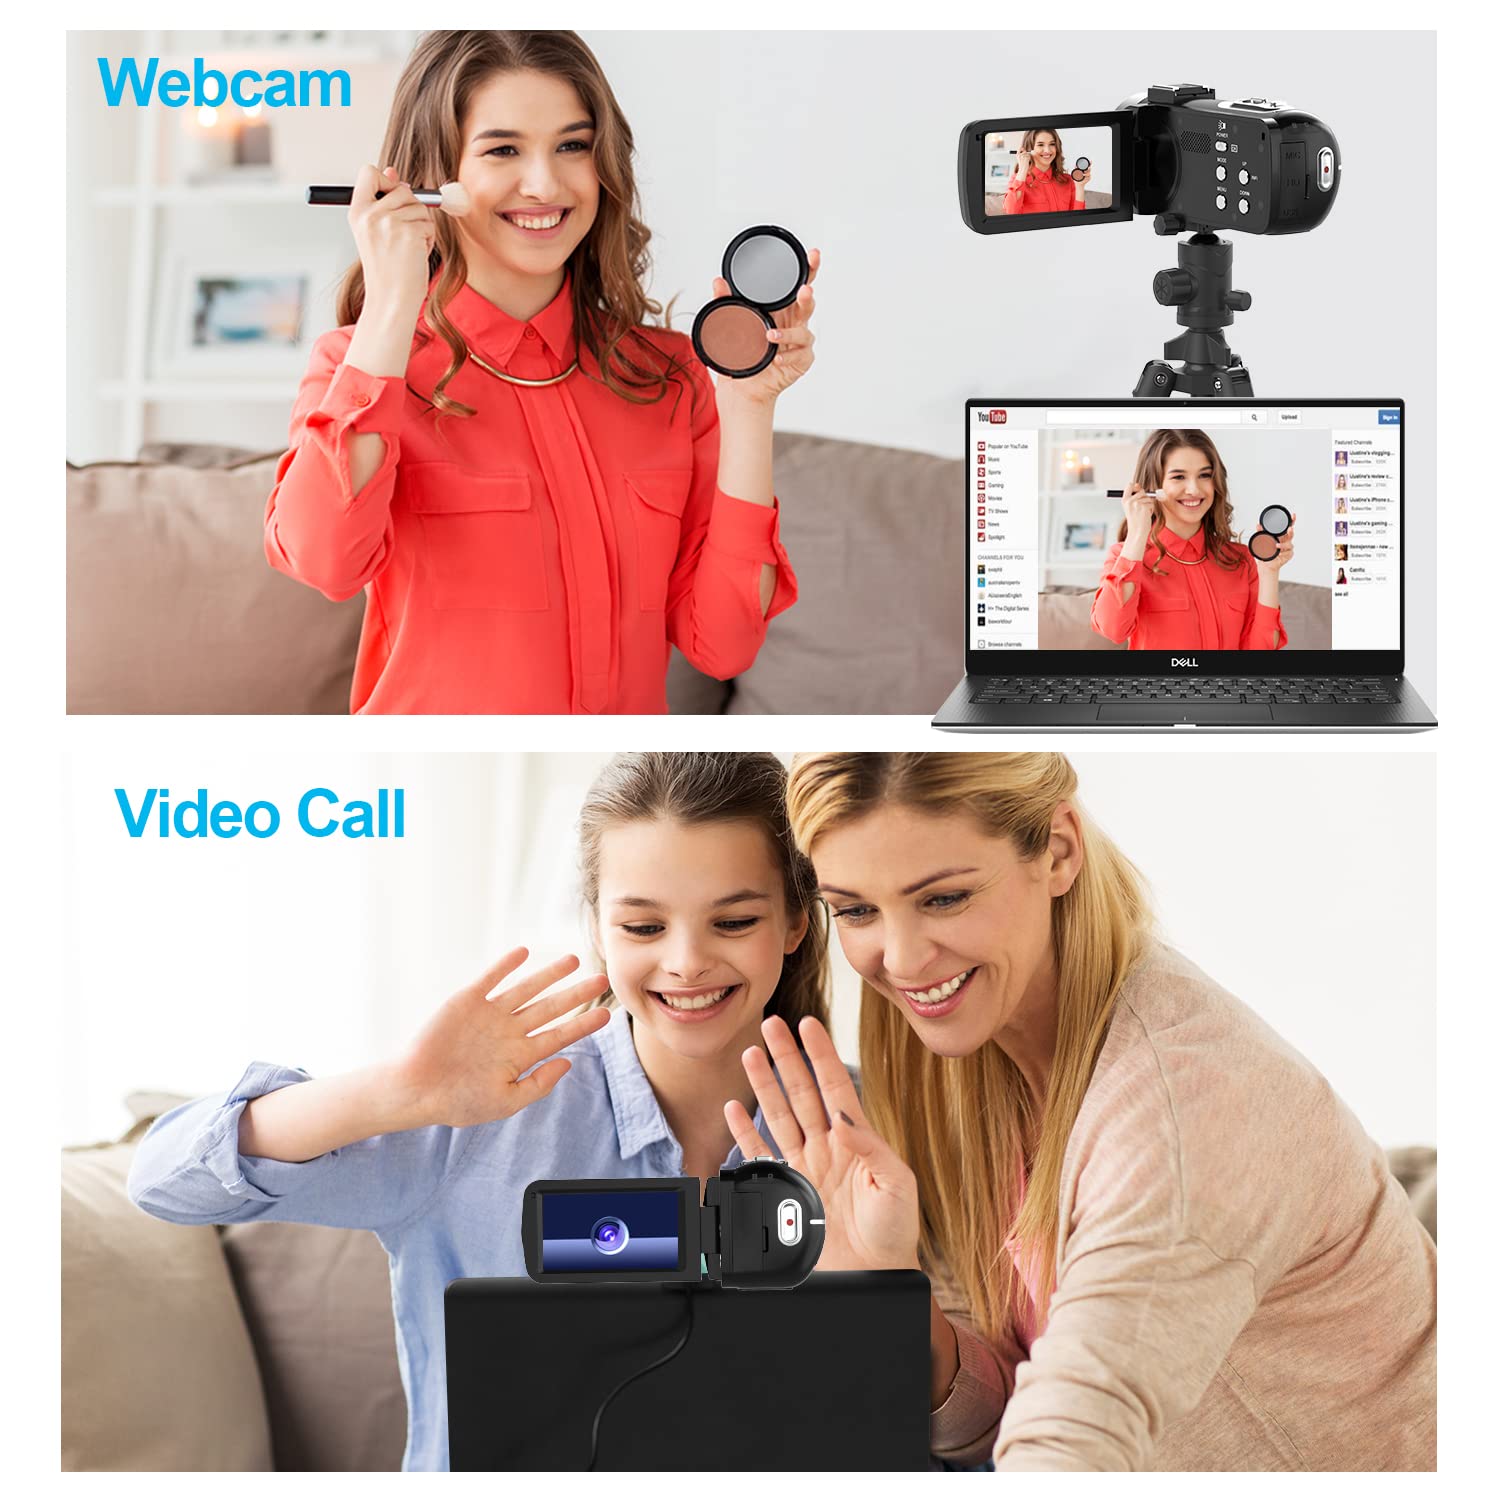 Hojocojo 4K Video Camera, Camcorder with IR Night Vision, WiFi Digital Camera, 18X Digital Zoom, Vlogging Camera for YouTube, Kids Video Camera, Built in Microphone, Remote, 3